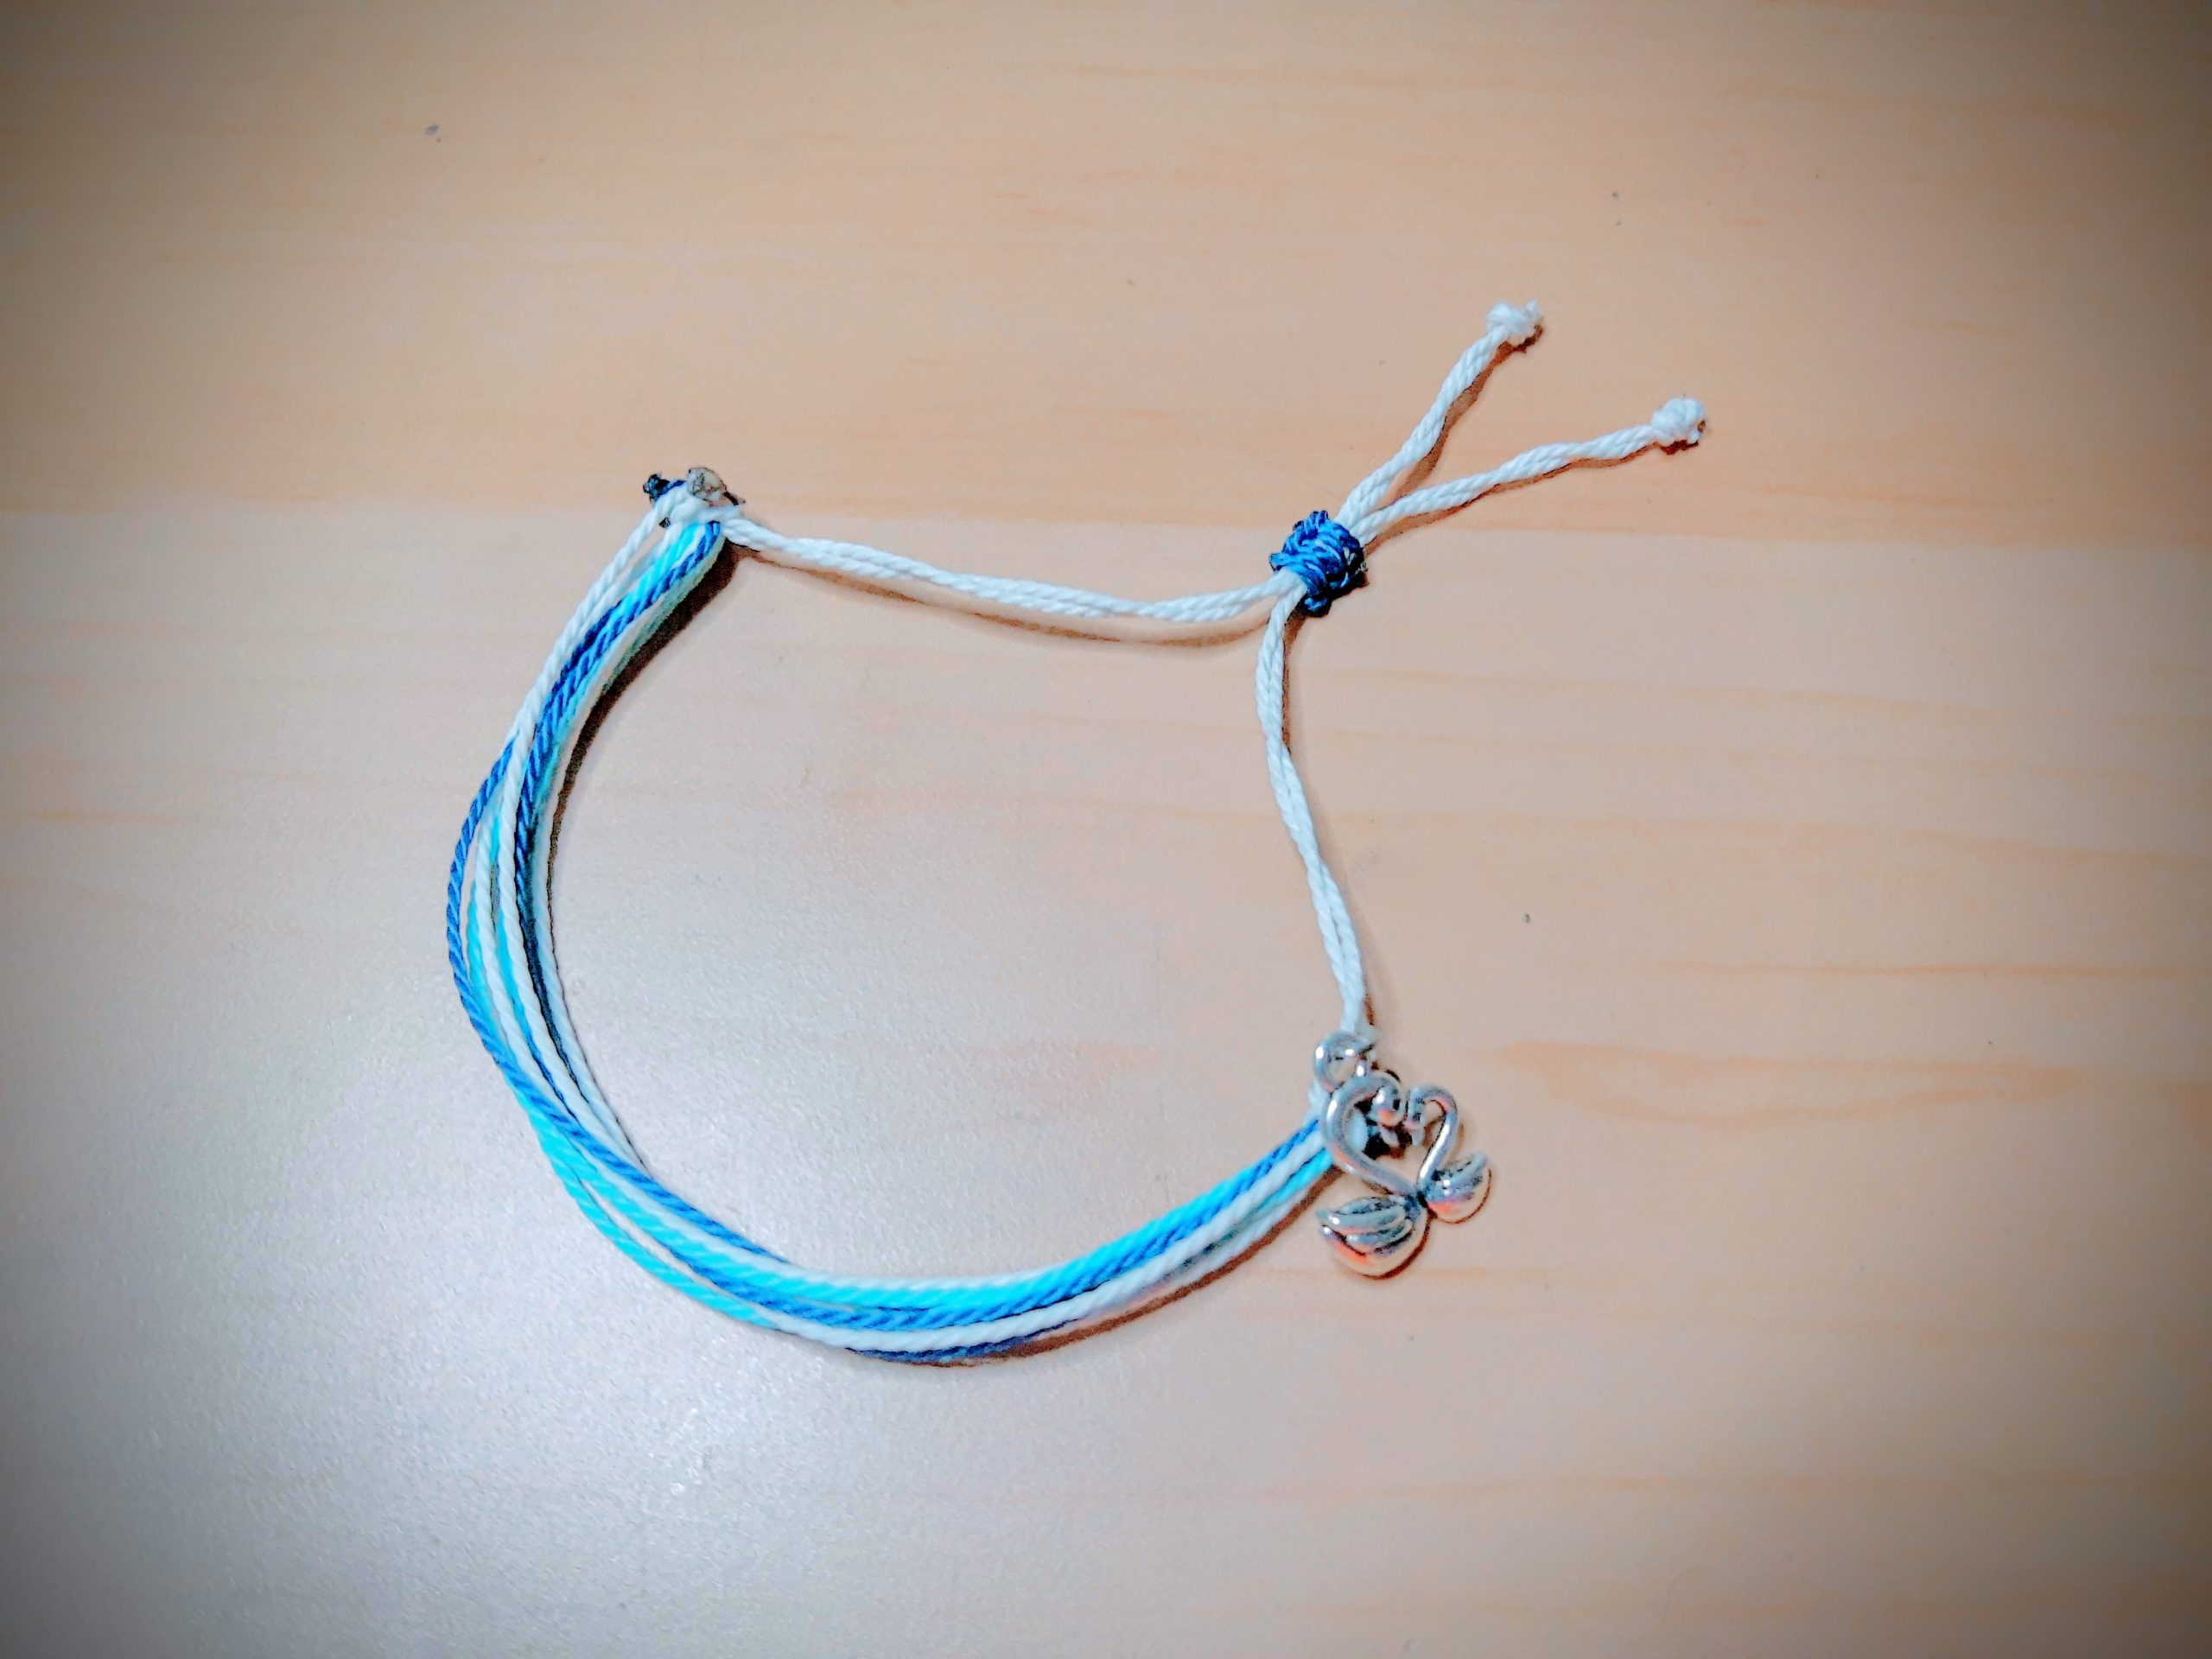 Easy to make String bracelet